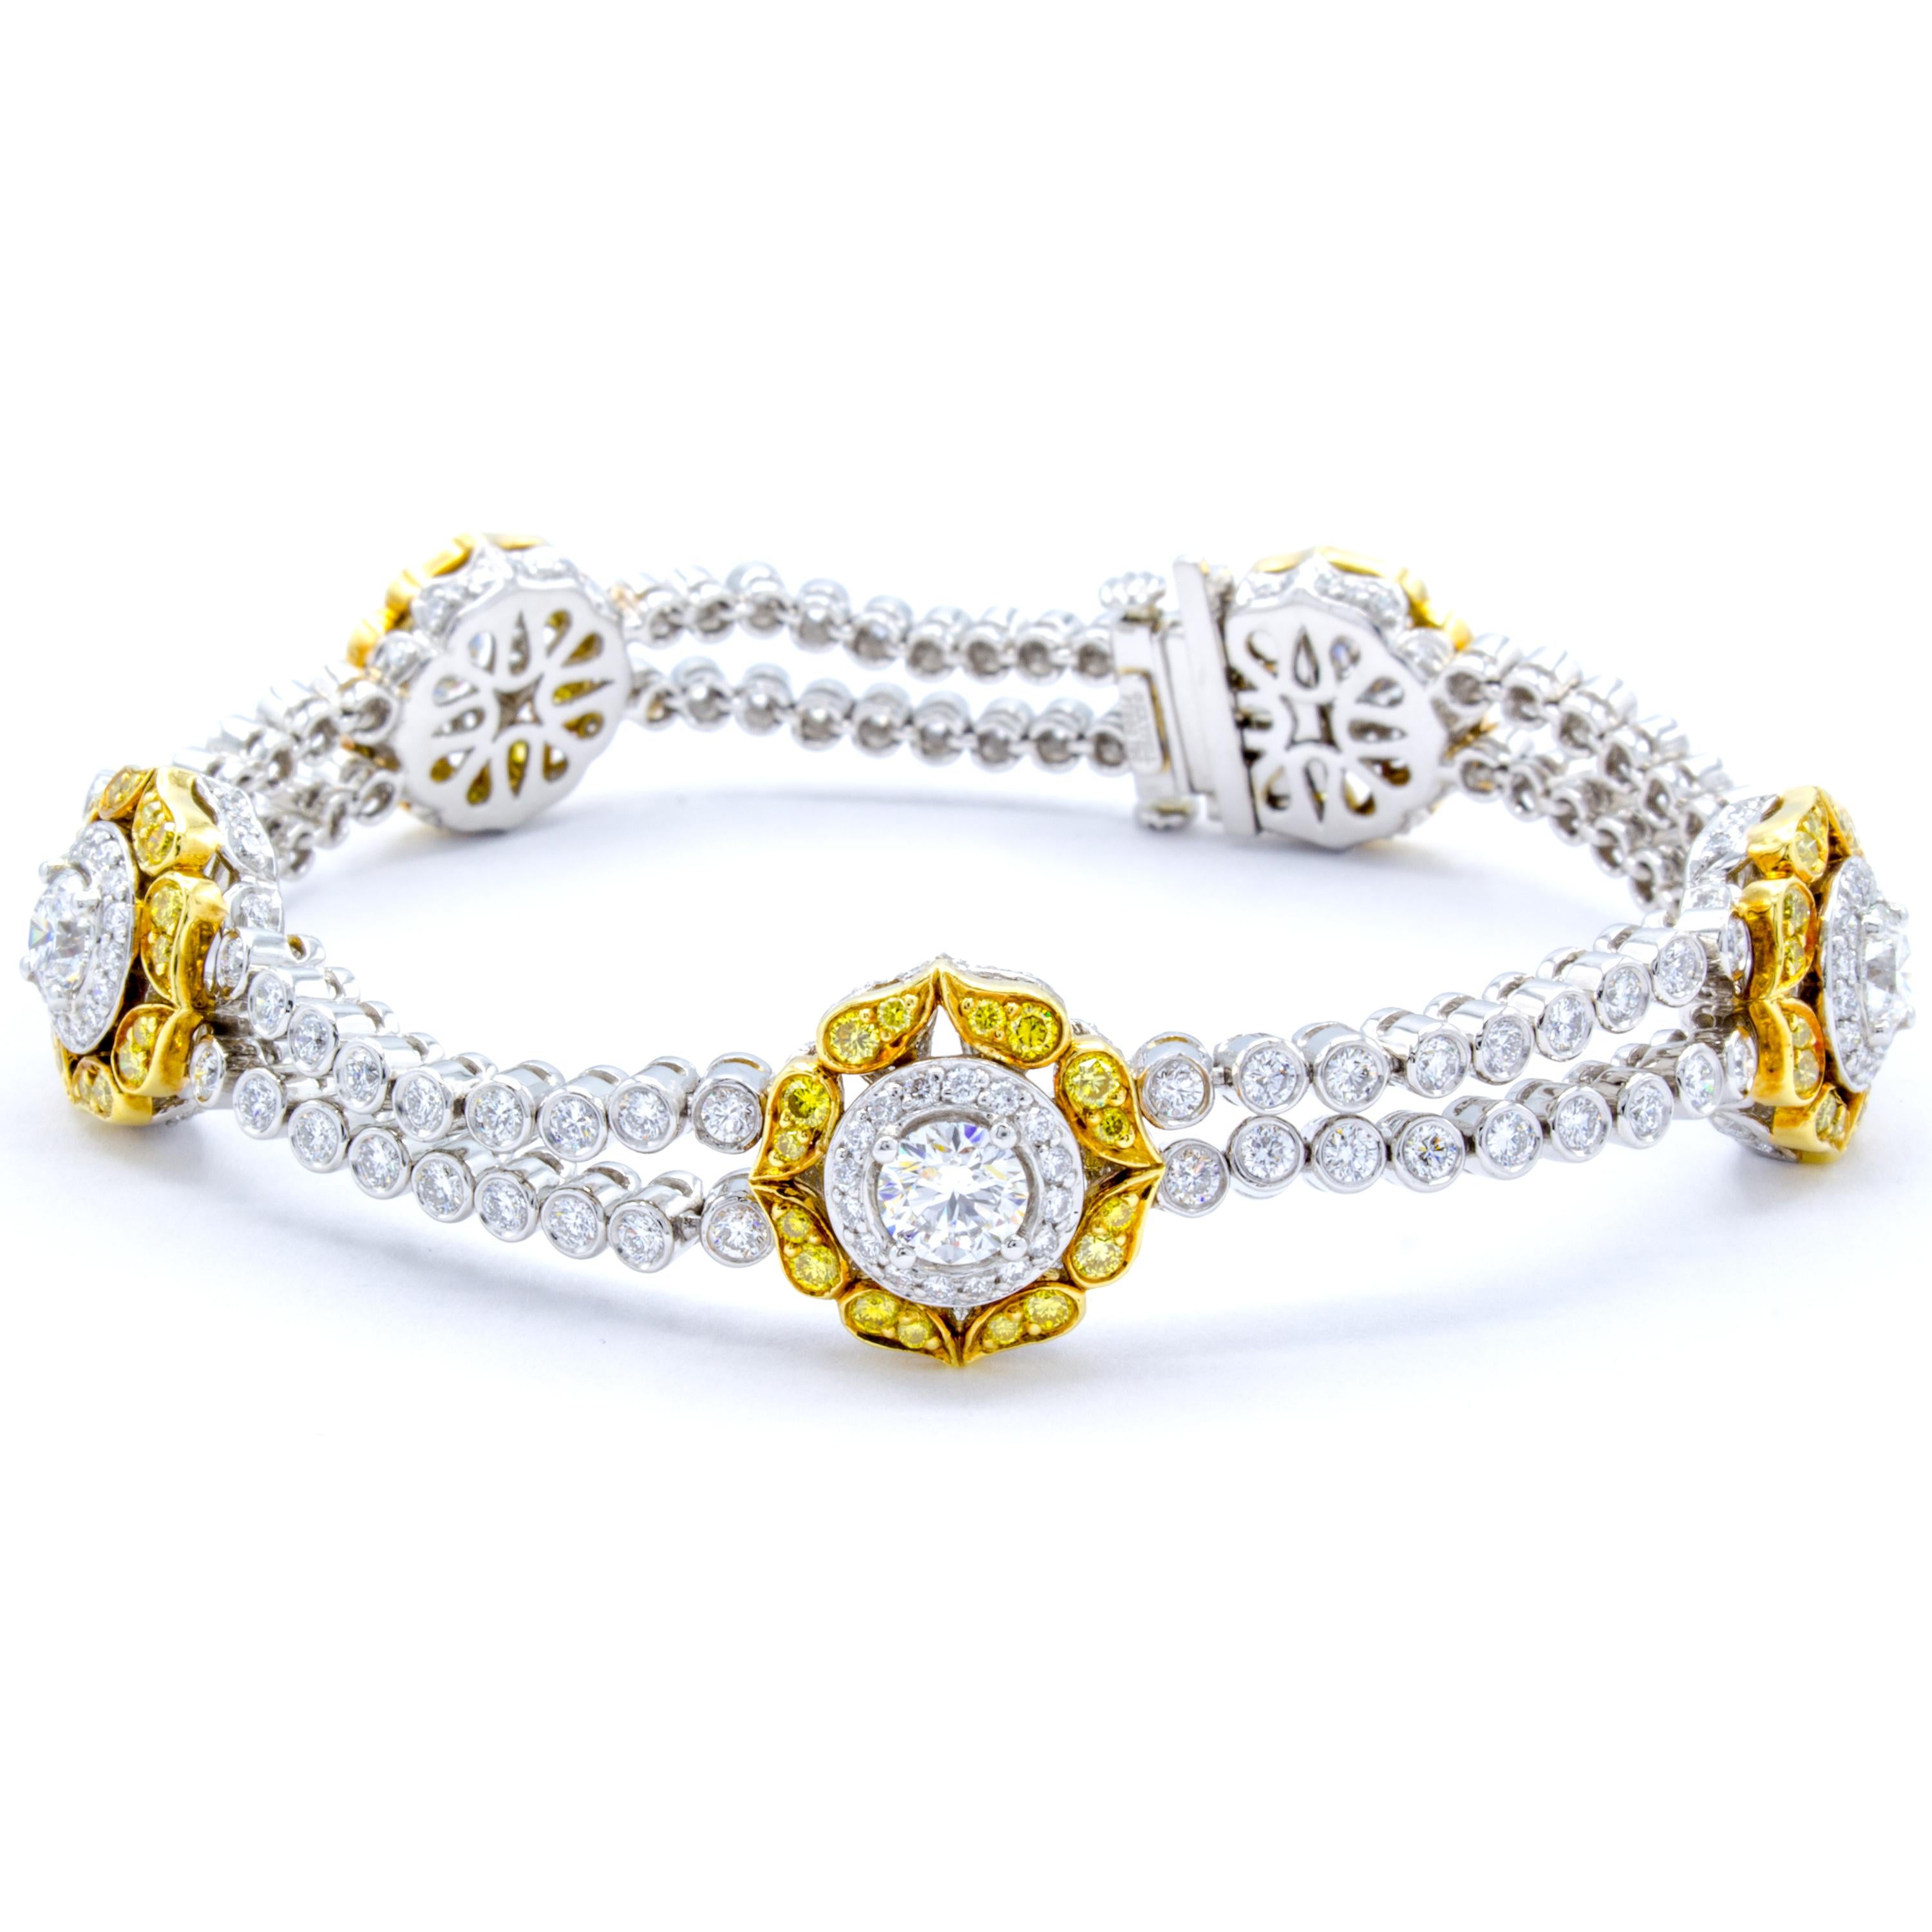 Modern David Rosenberg 5.77 Total Carats White and Natural Fancy Diamond Bracelet